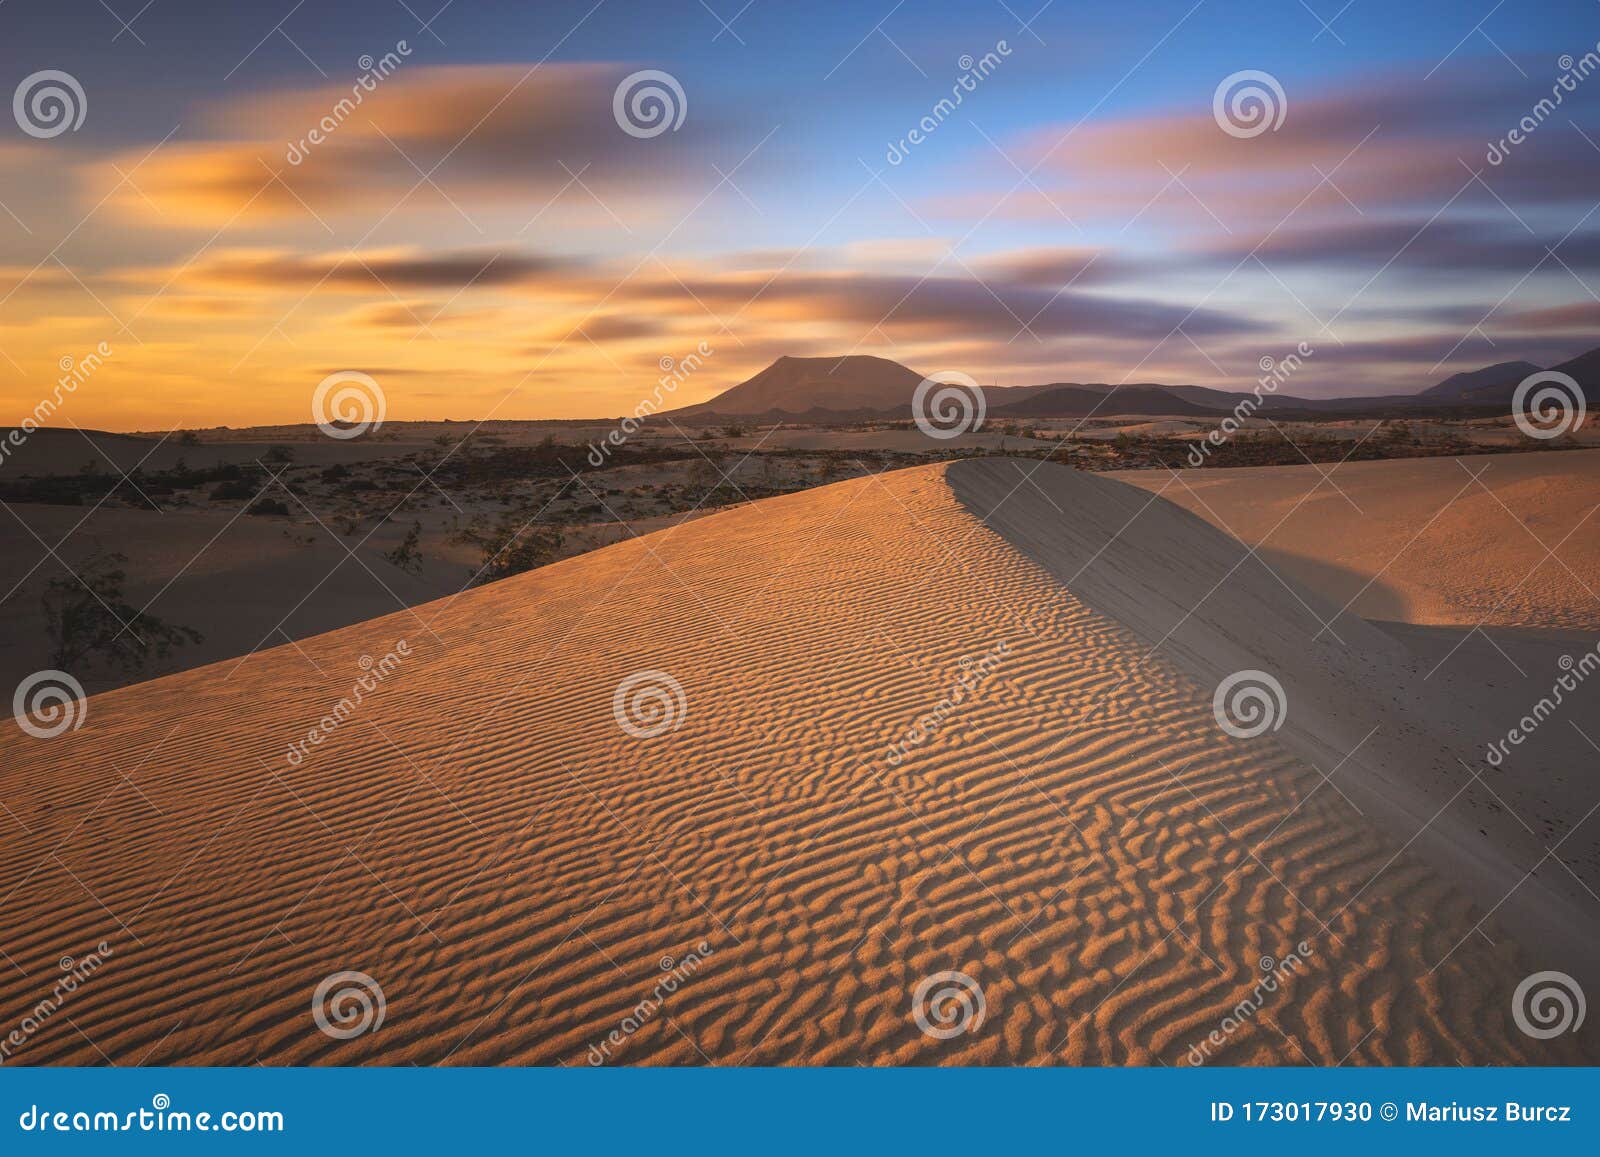 beautiful landscape of sand dunes in the national park of dunas de corralejo